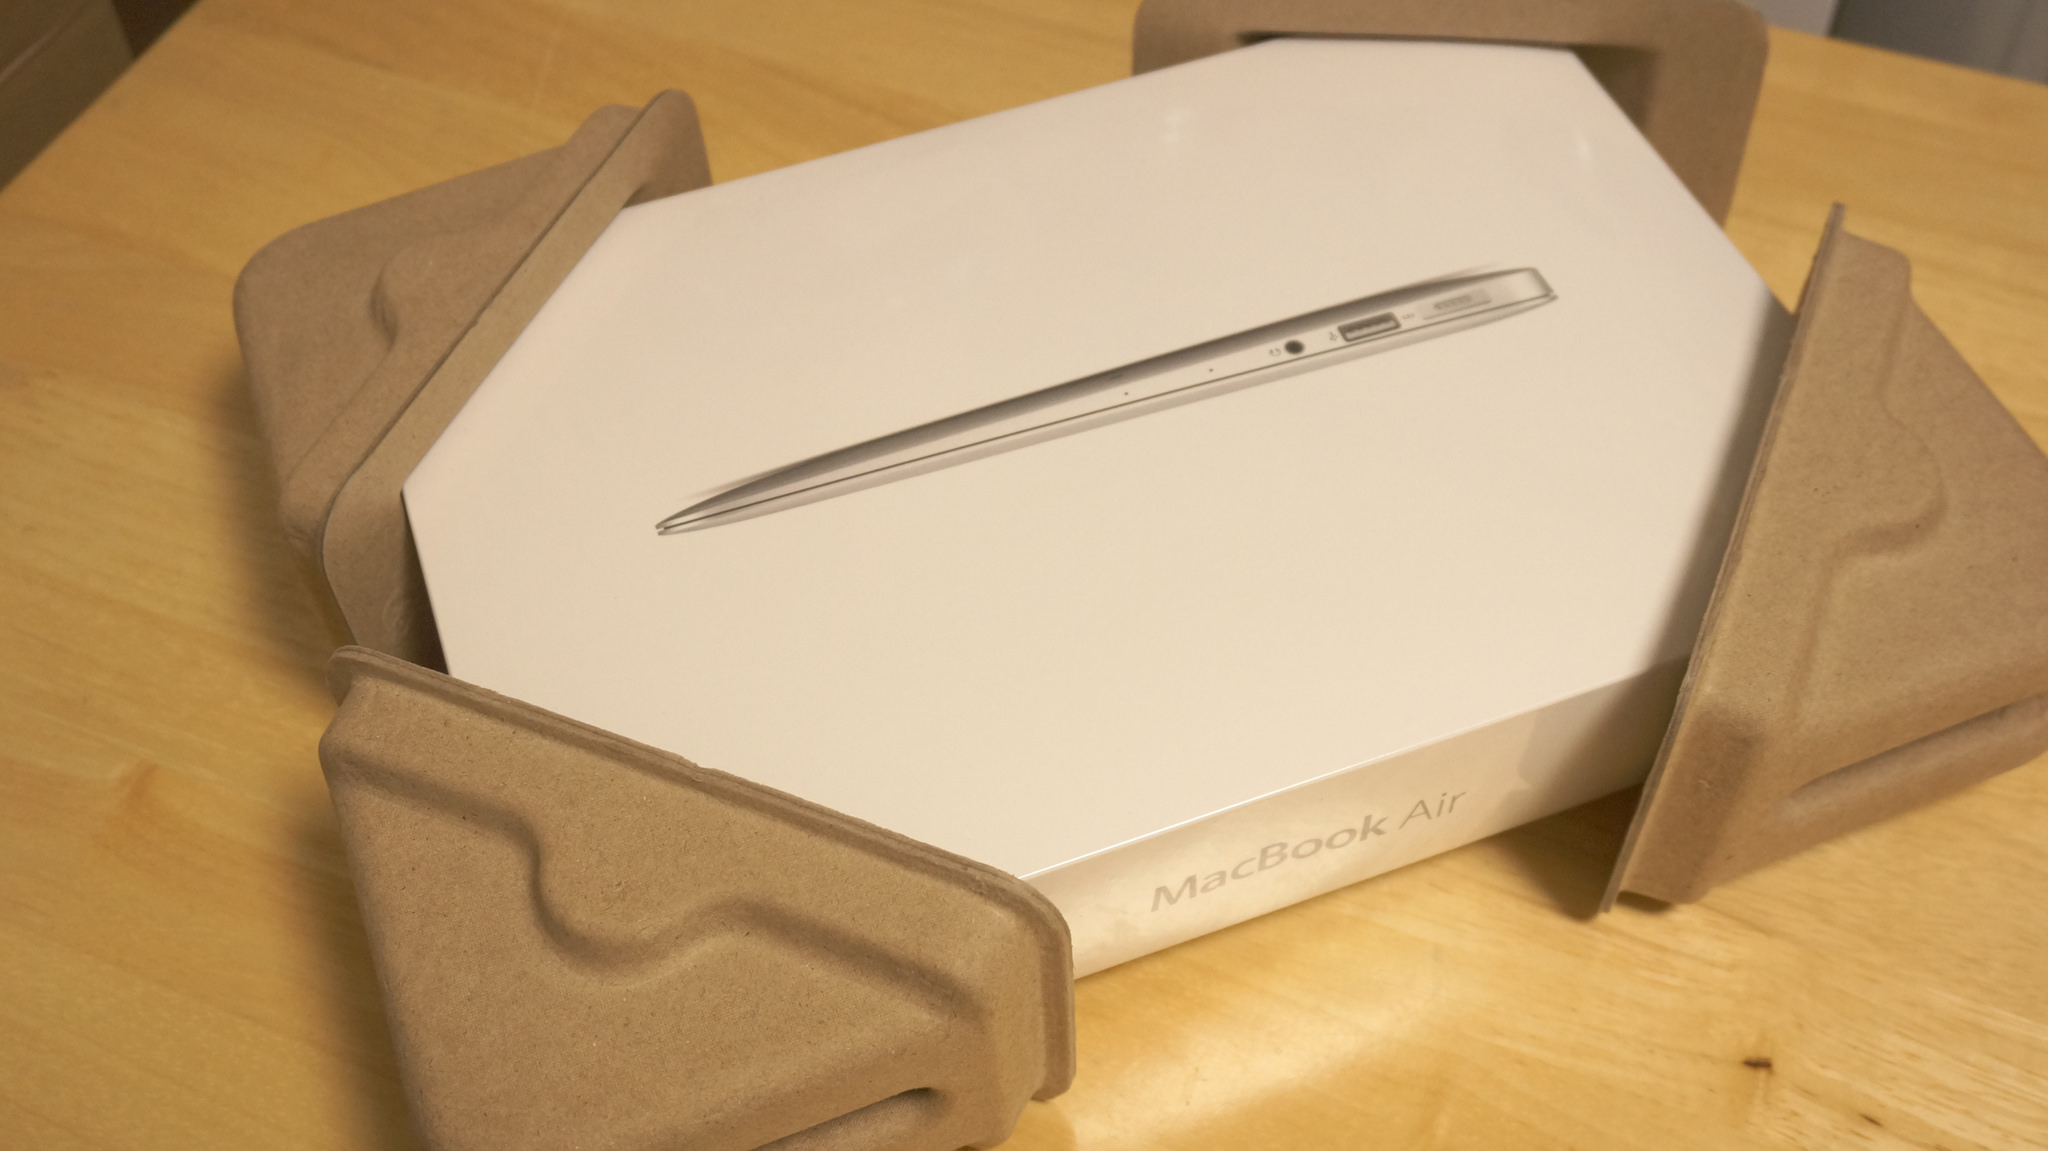 MacBookAir-11-inch-2014-early